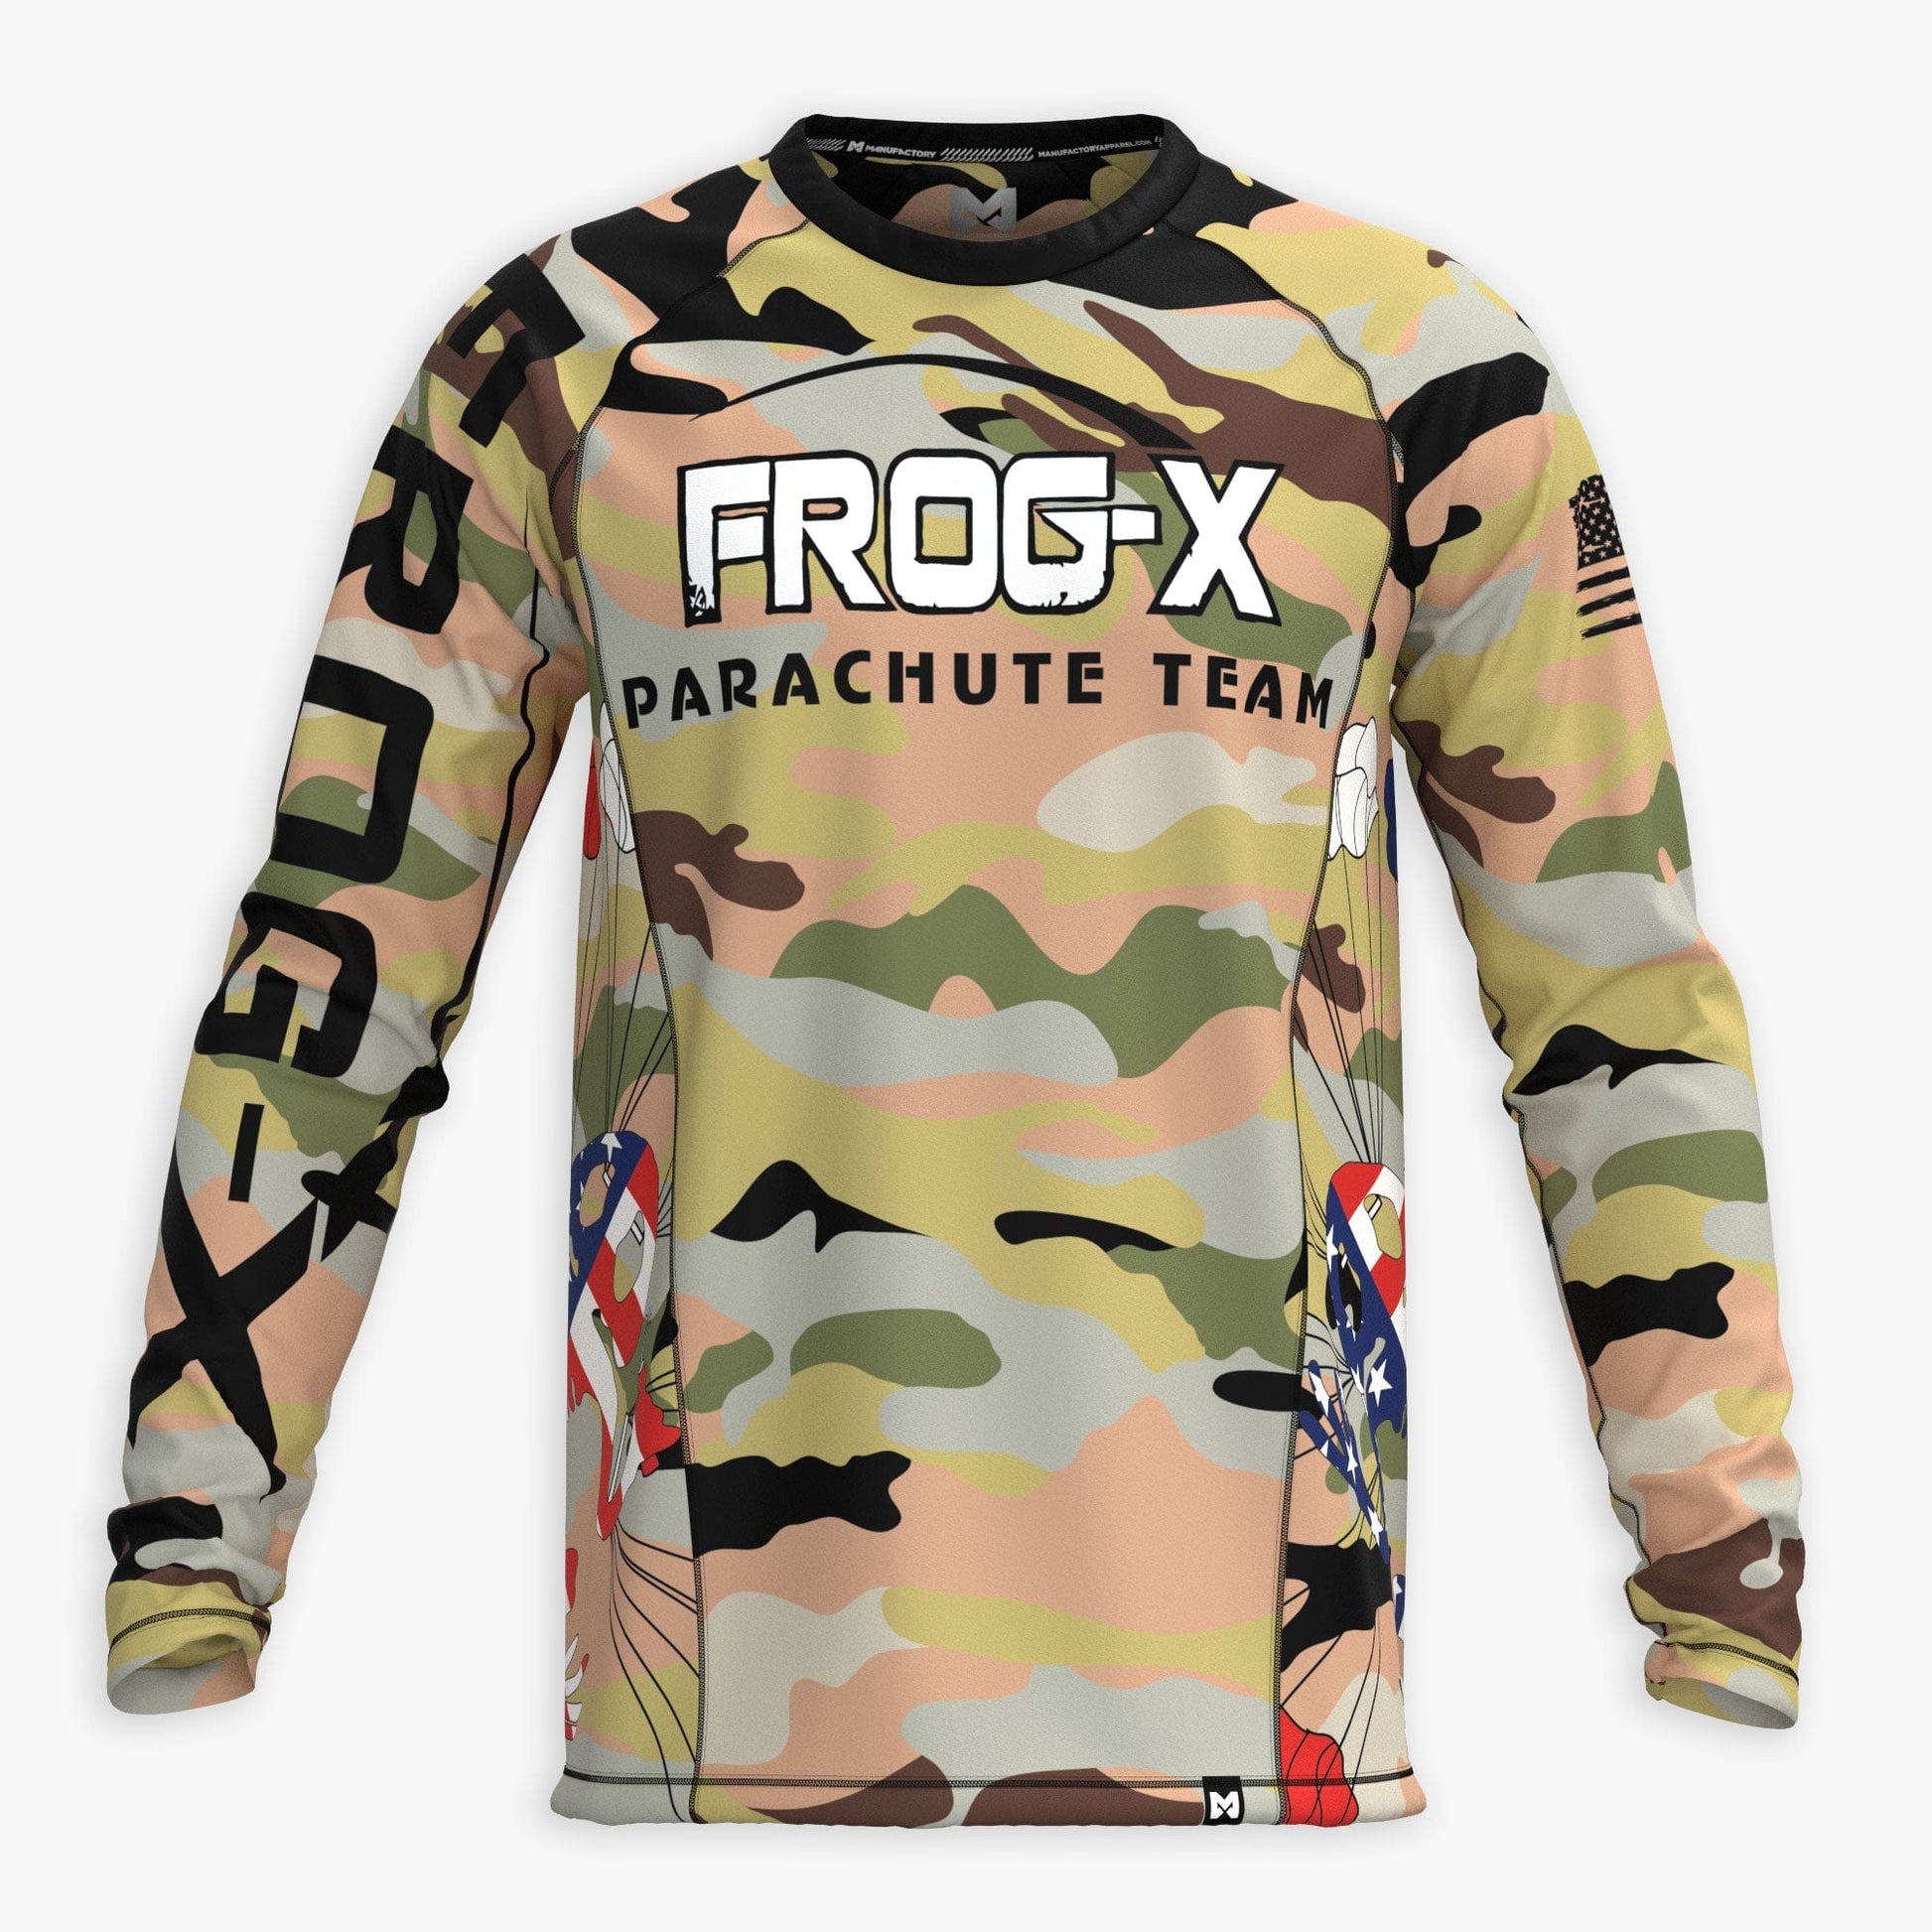 Frog - X Parachute Team Jersey - Manufactory Apparel - Frog - X Parachute Team